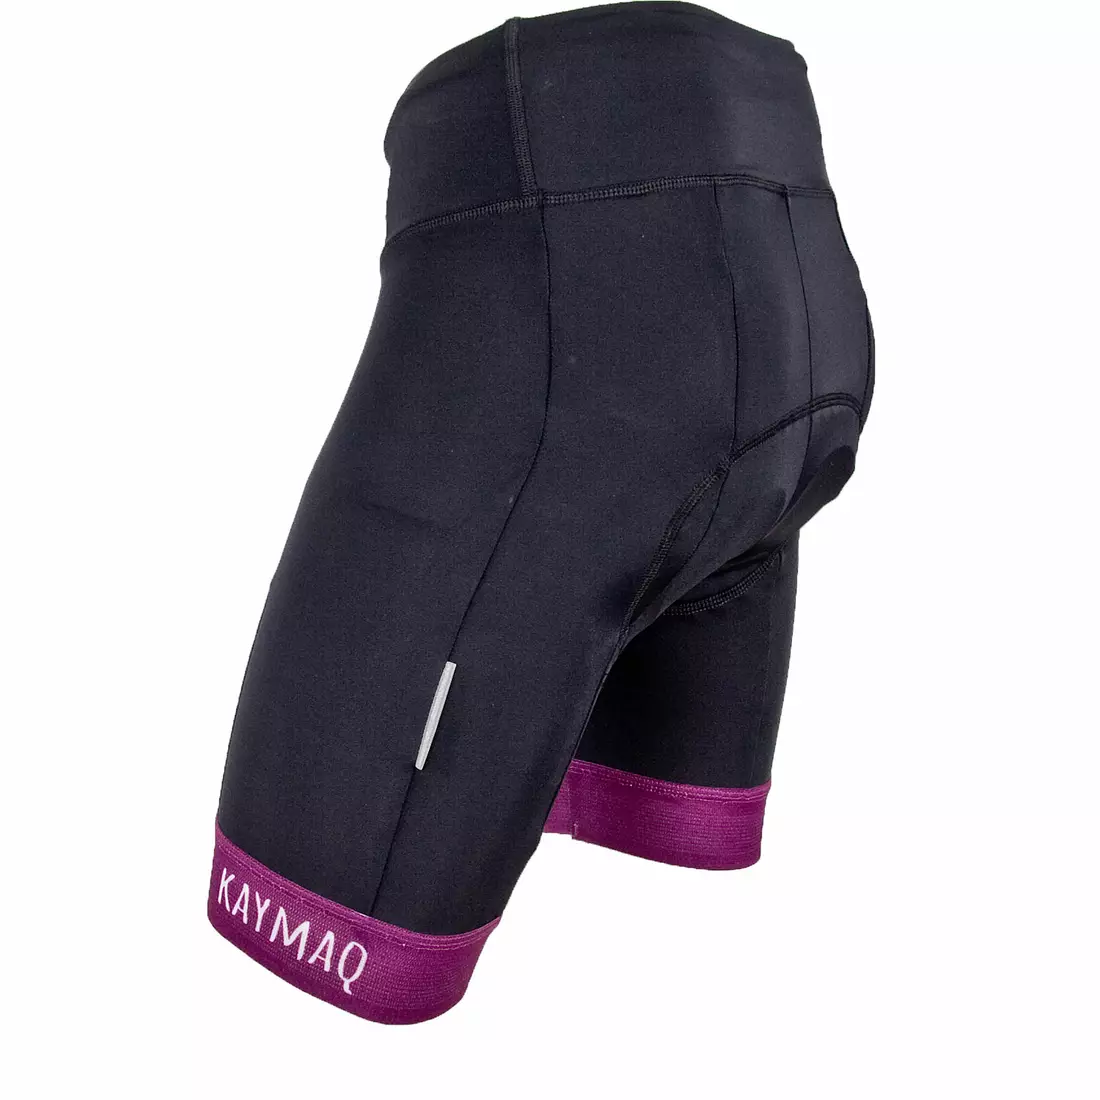 KAYMAQ women's cycling shorts, Alta 01.191 black-purple